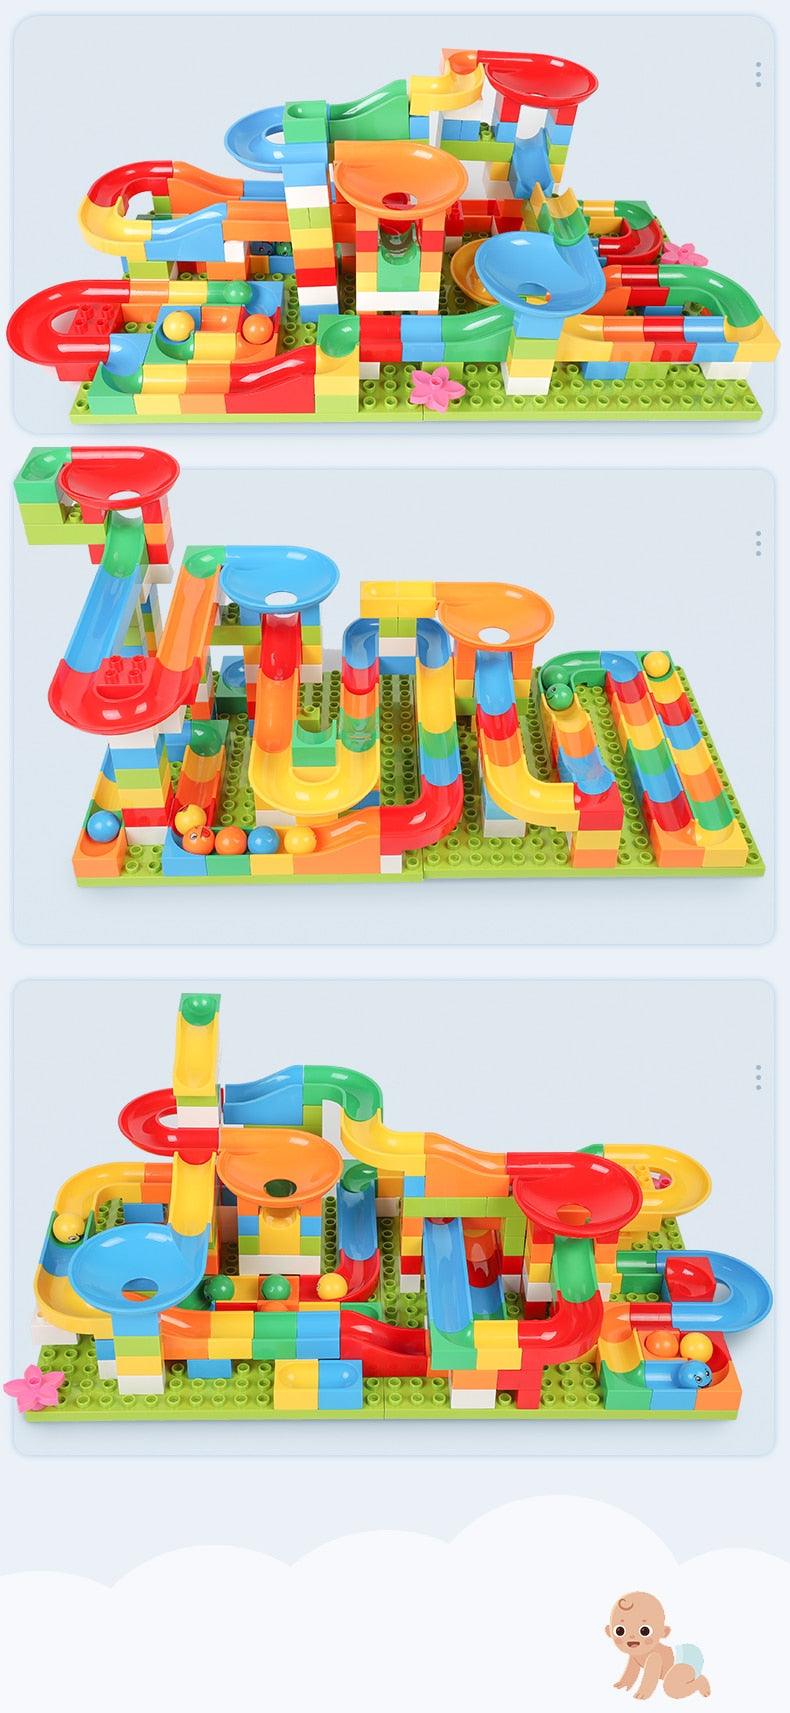 117PCS DIY Construction Marble Race Run Maze Balls Track - Children Gaming Building Blocks Toys - Compatible With Big Size Blocks (8X2)